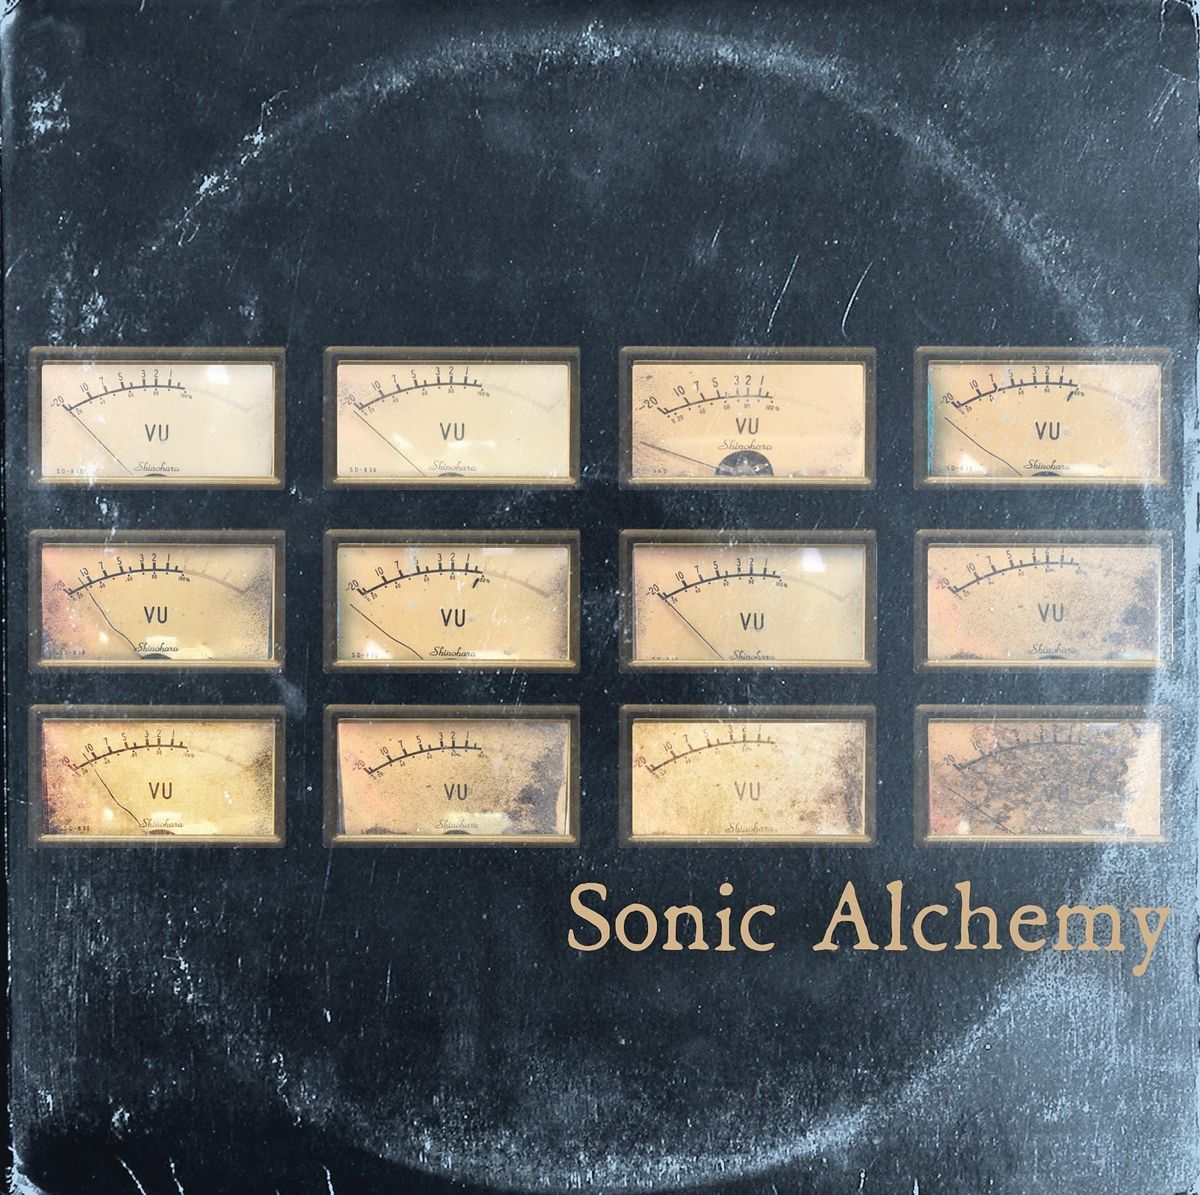 Sonic Alchemy